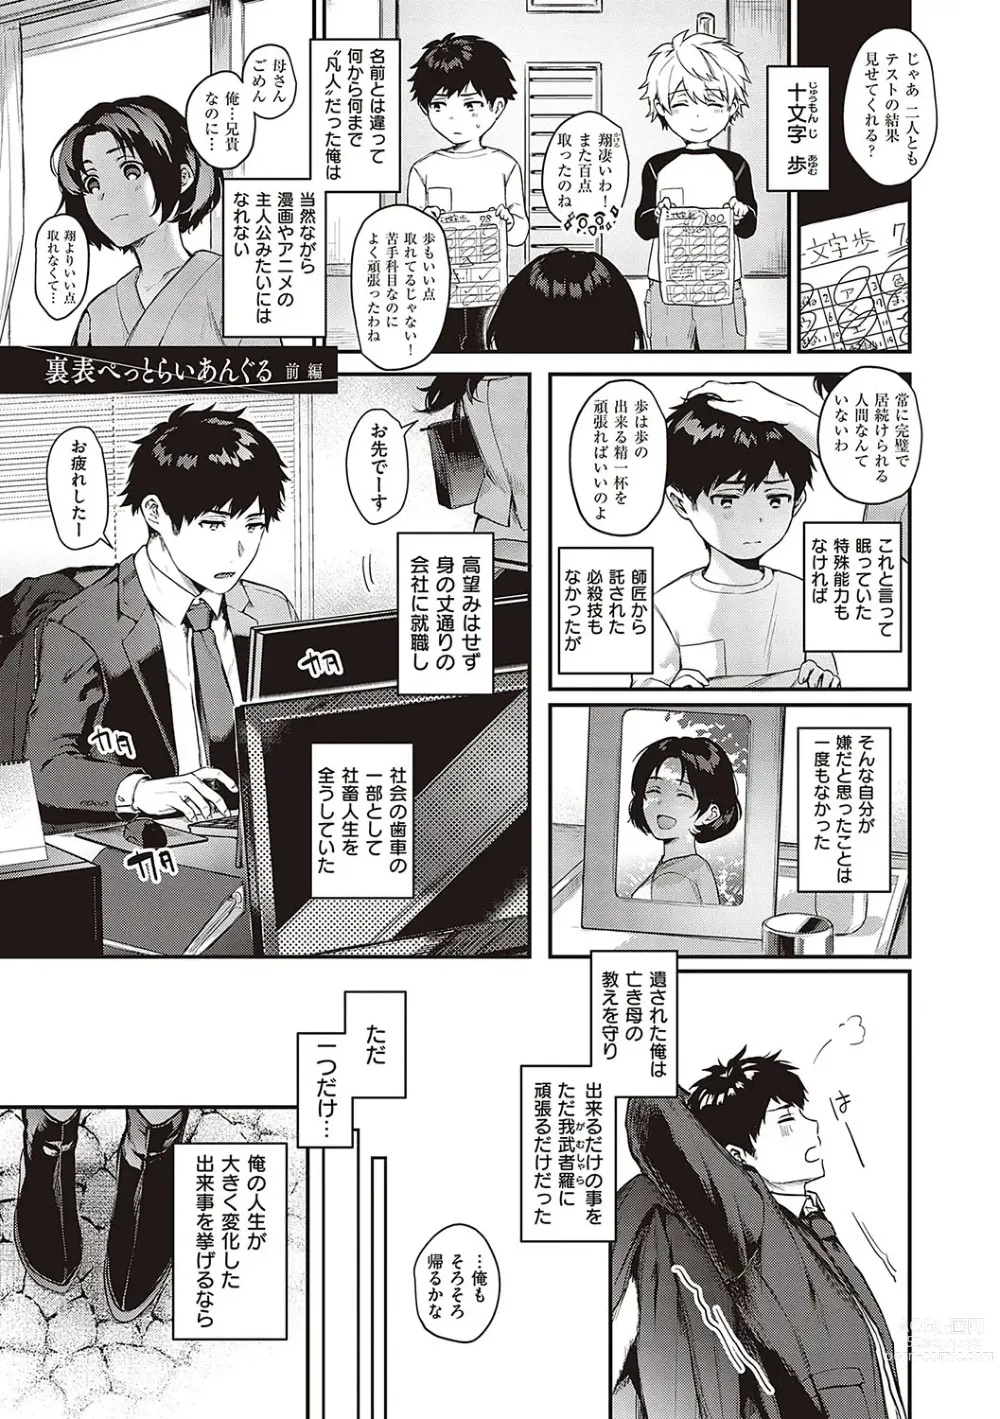 Page 6 of manga Kedamono Inmoralism - The Beastly Immoralism